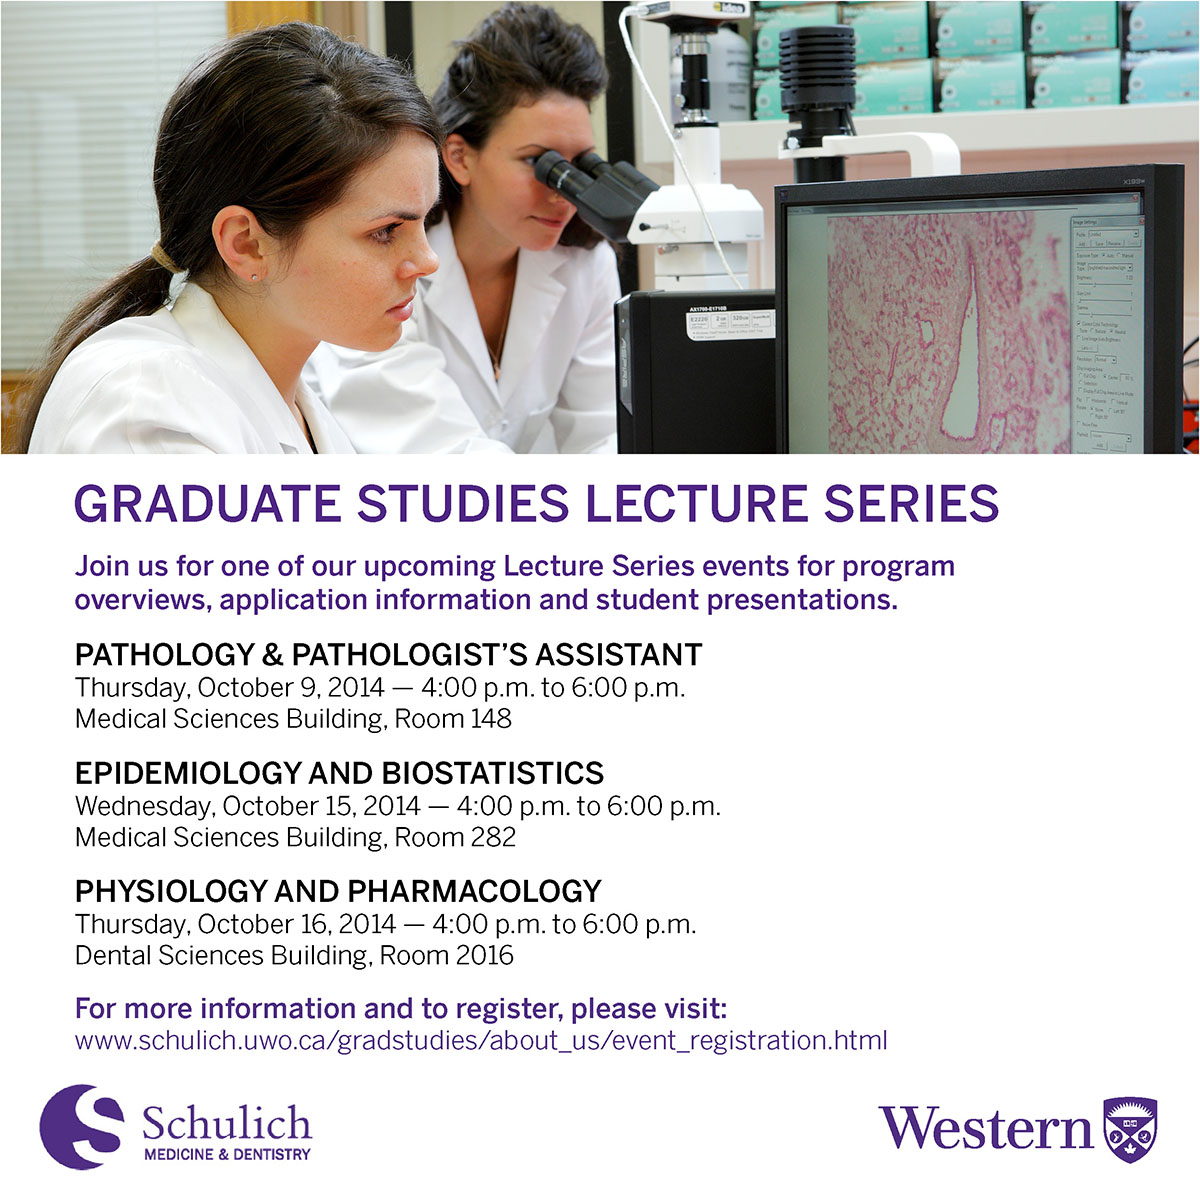 Graduate studies lecture series